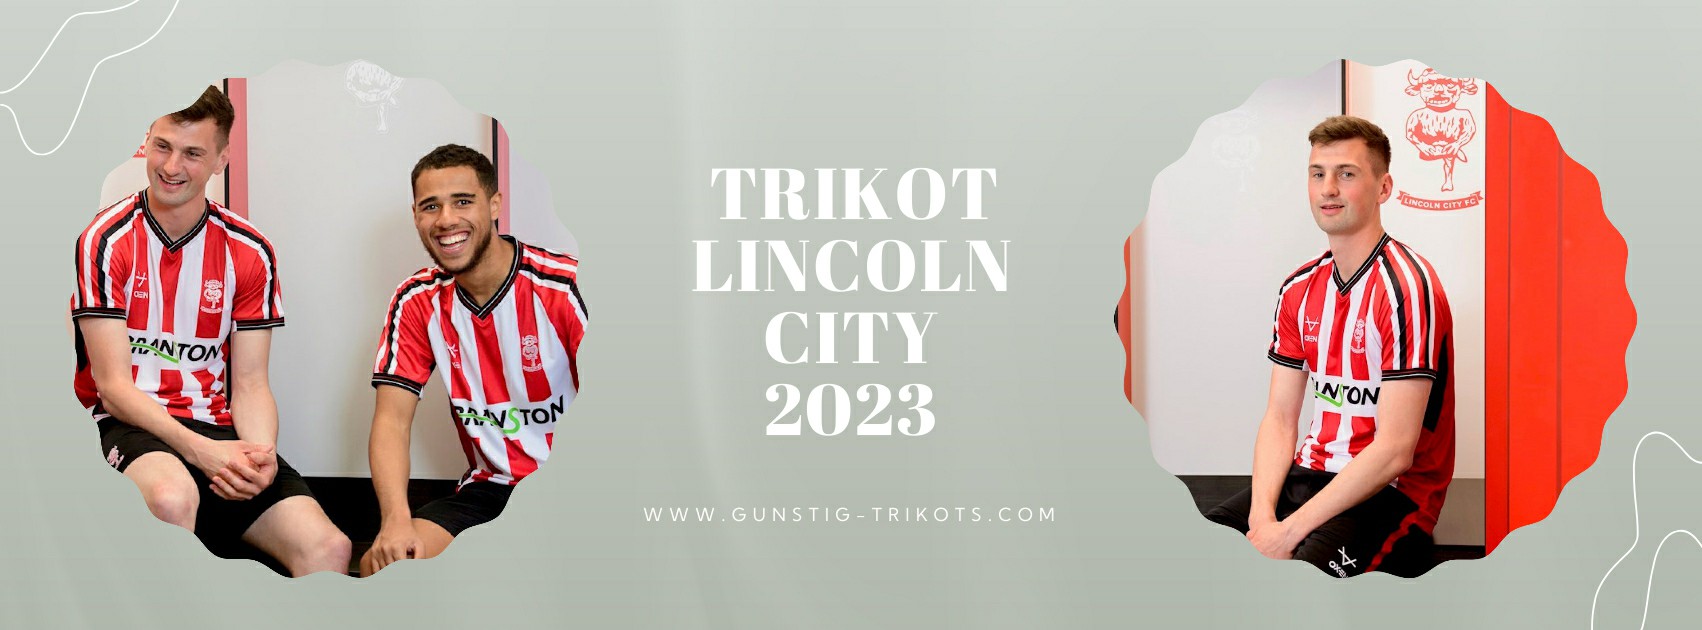 Lincoln City Trikot 2023-2024